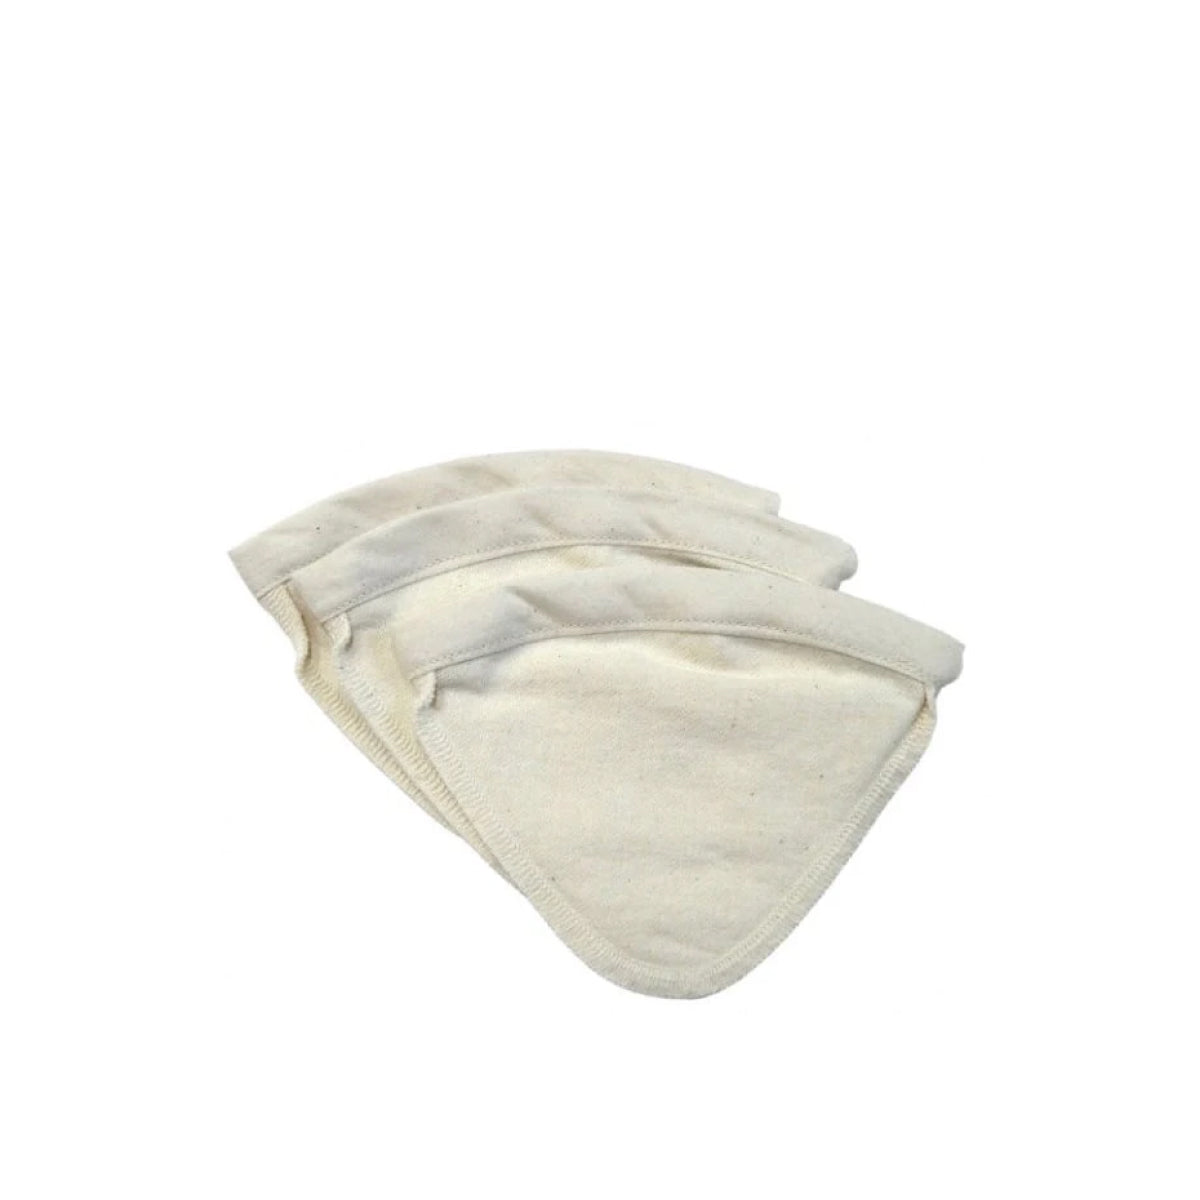 Cloth Filter for Hario Drip Pot